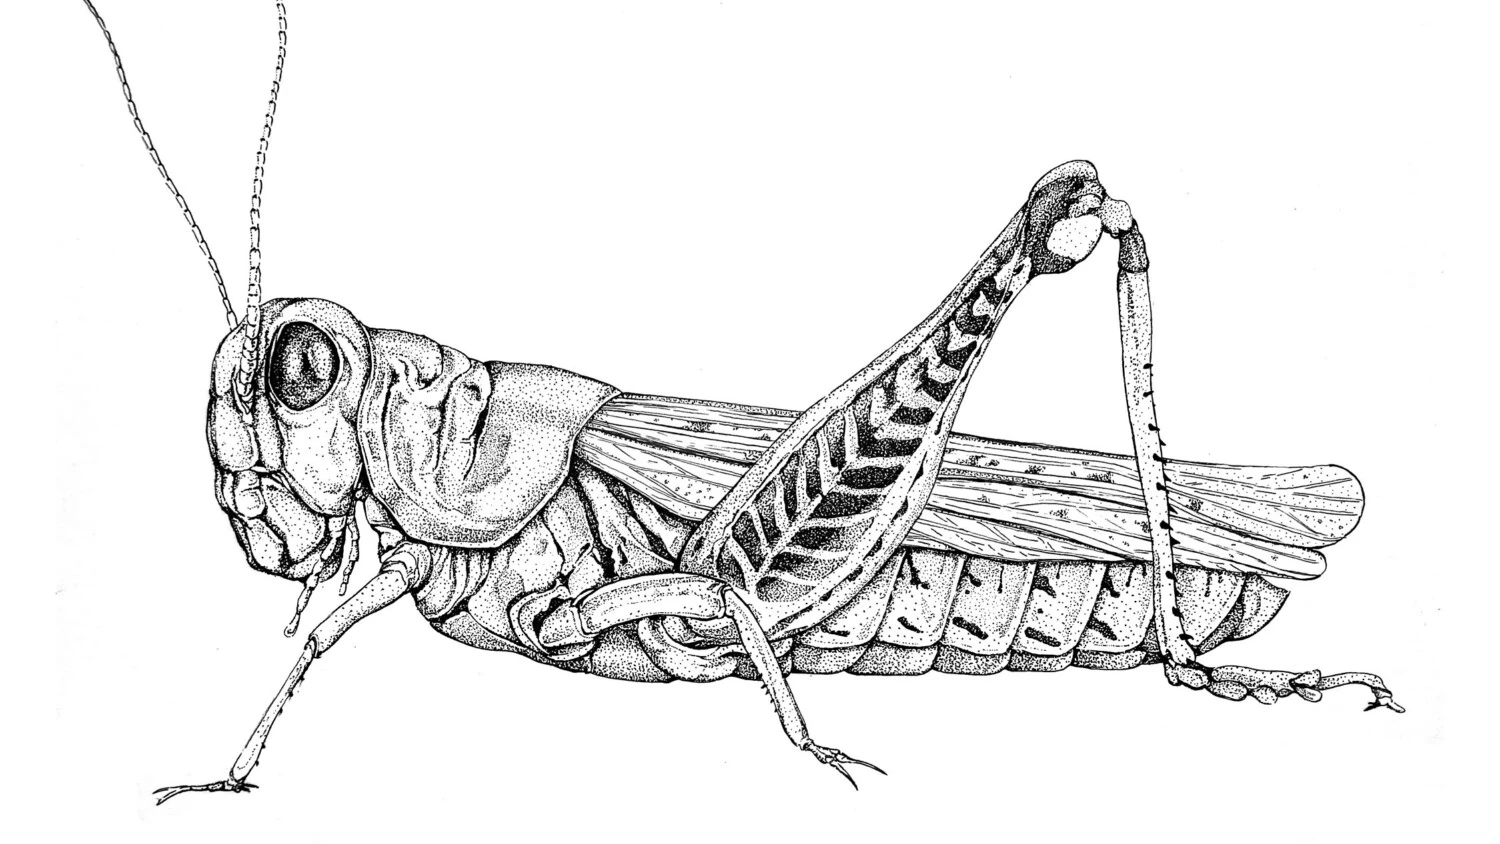 A grasshopper illustration